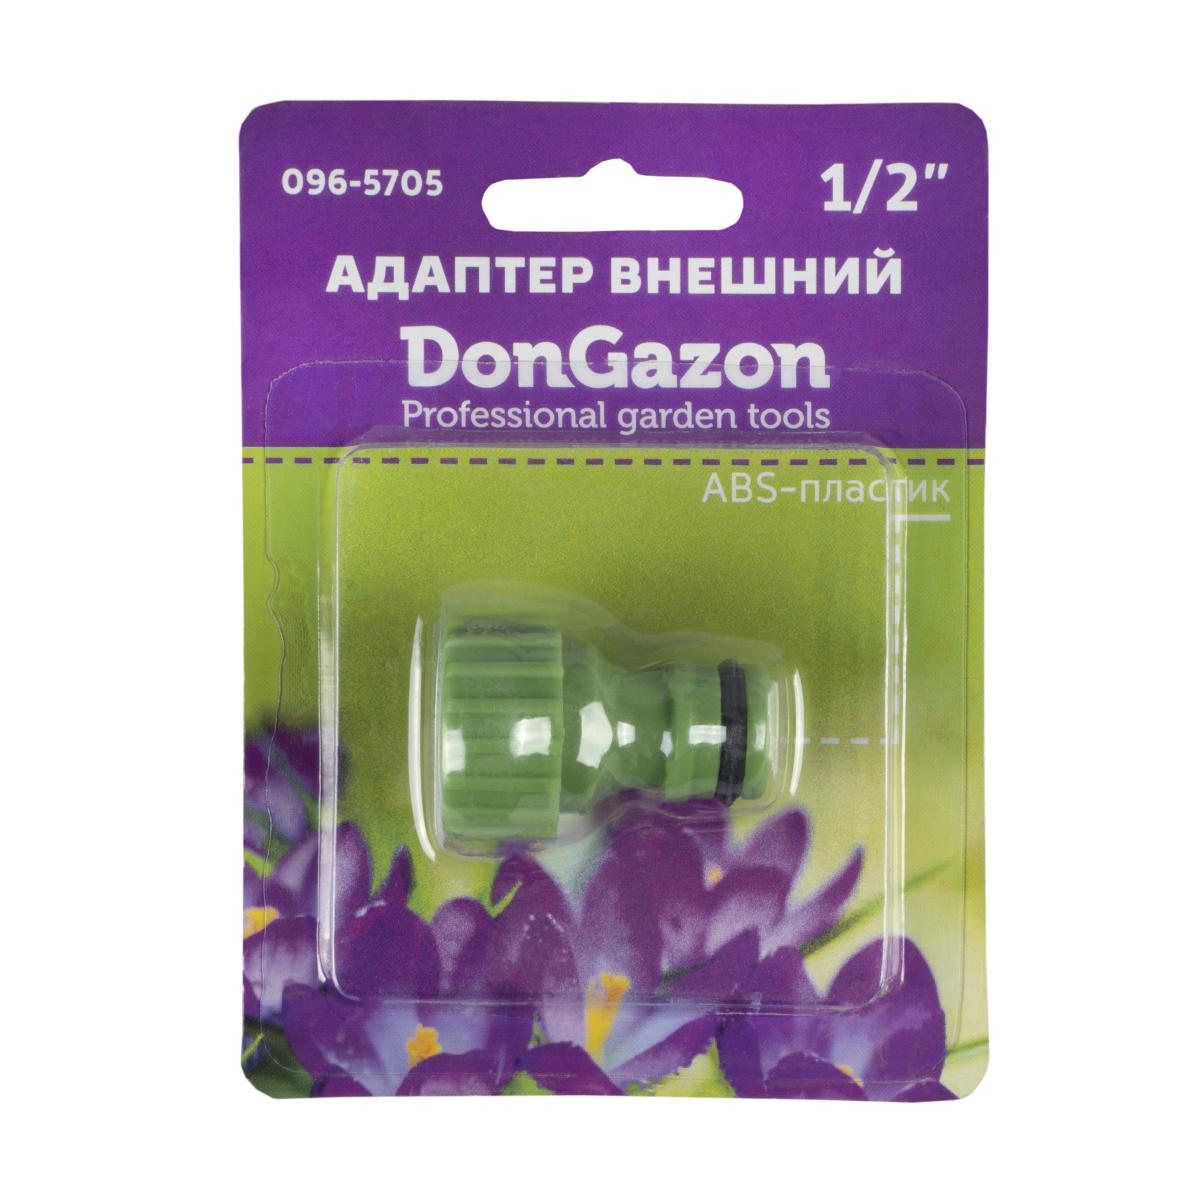 Купить DON GAZON Адаптер внешний для шлангов 1/2" пластм. 20/240 096-5705 42327